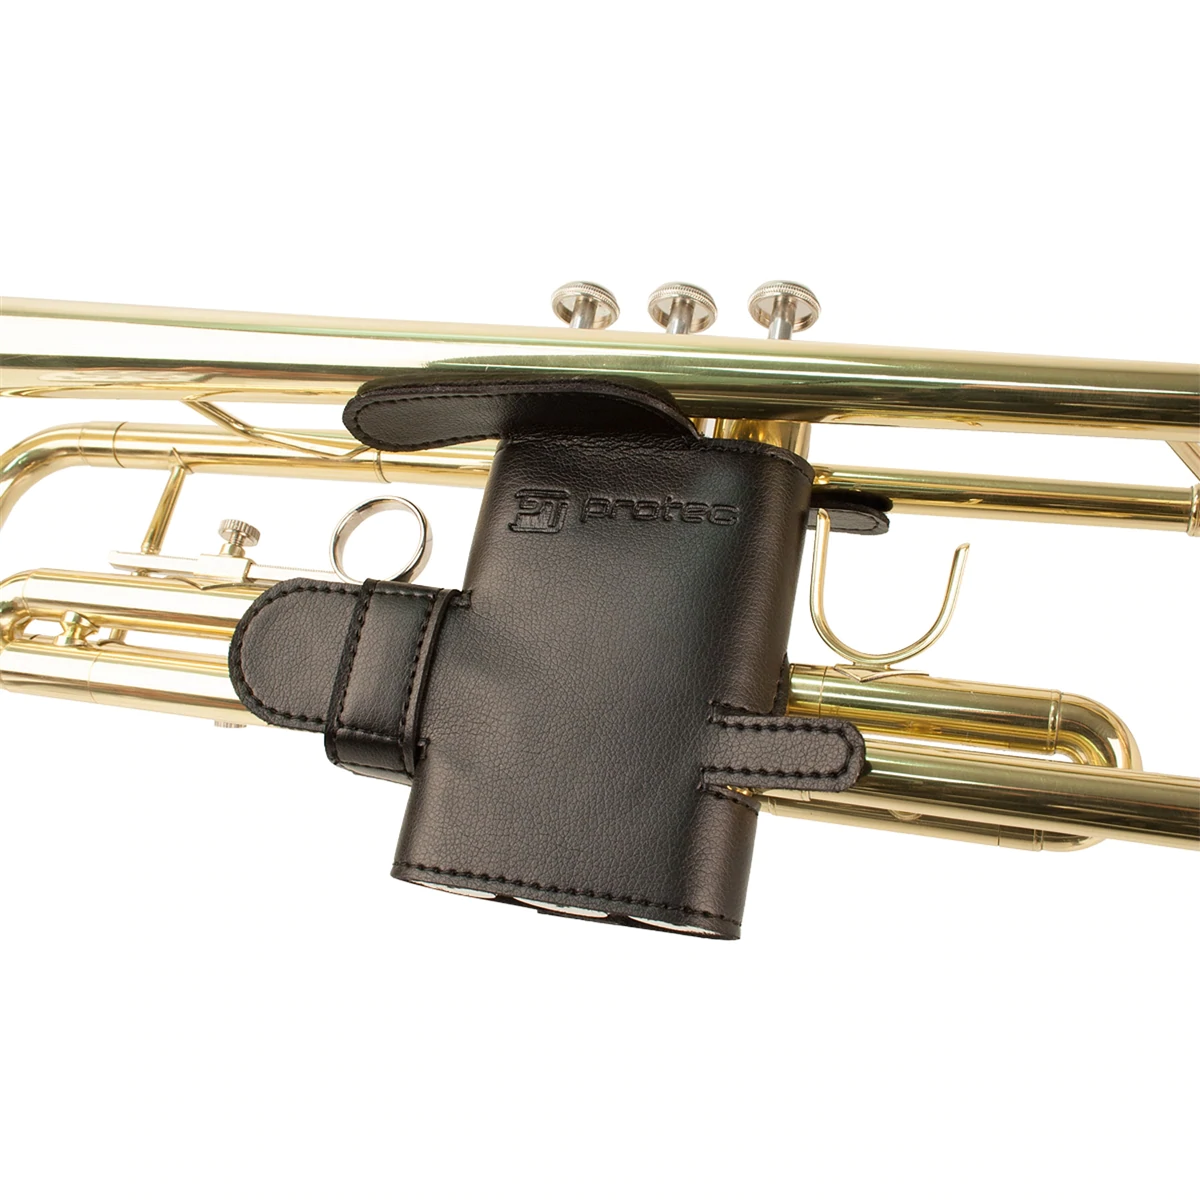 PROTEC Trumpet 6-Point Leather Valve Guard